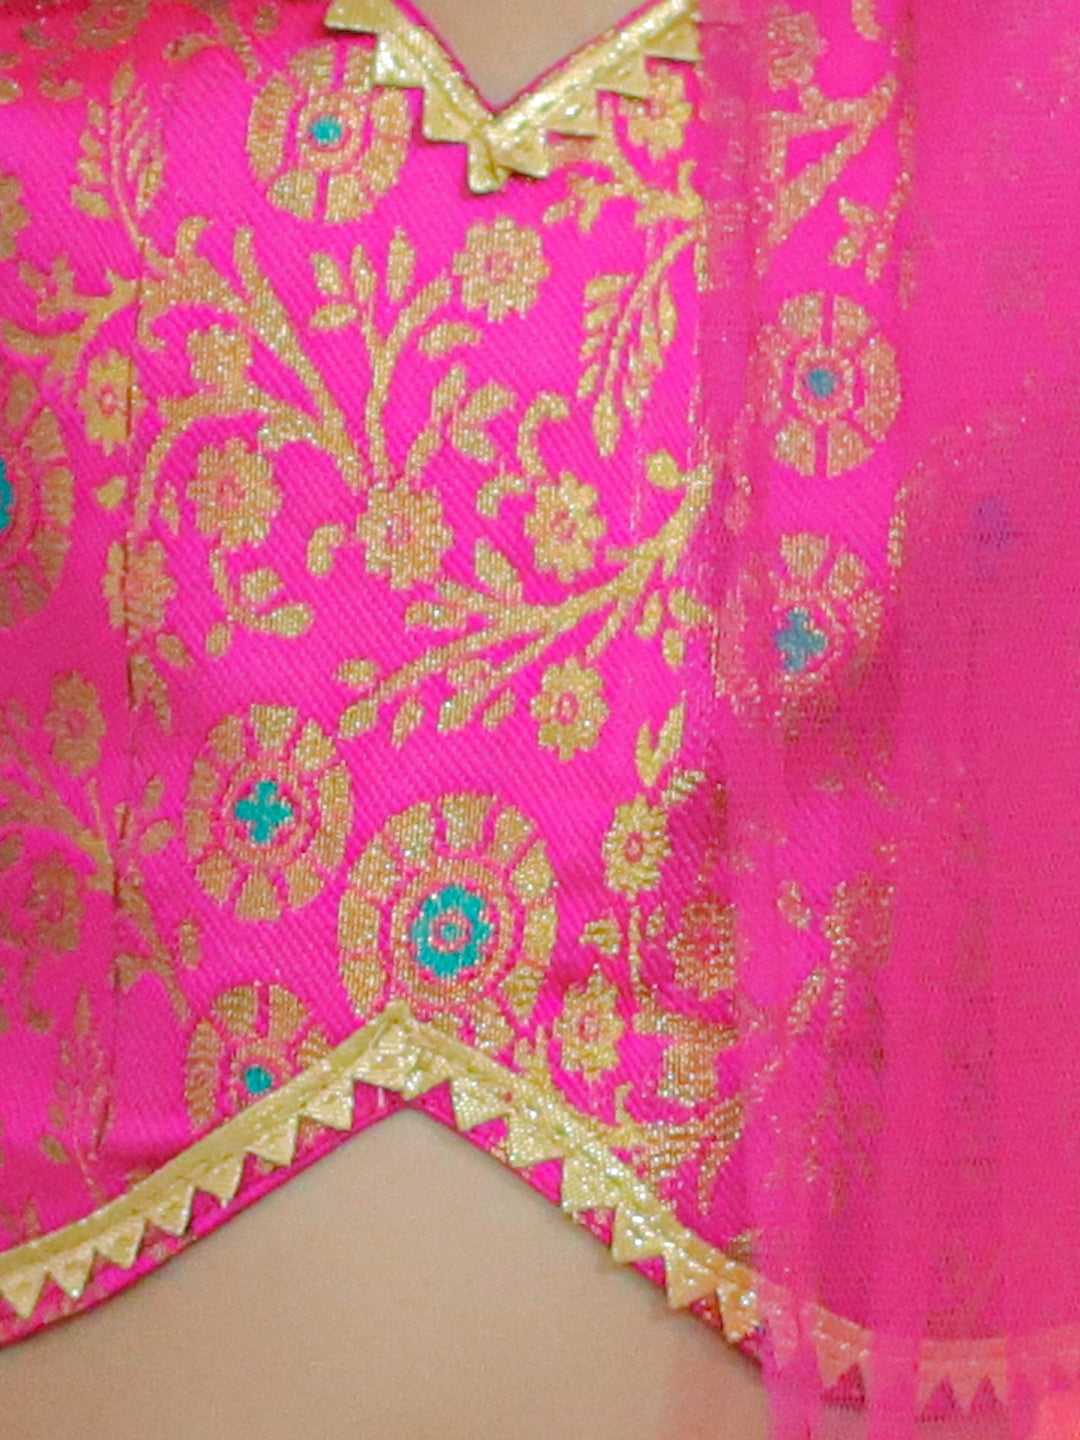 BownBee Girls Ethic Traditional  Indian Festive  Jacquard Choli with Net Lehenga with Dupatta-Pink